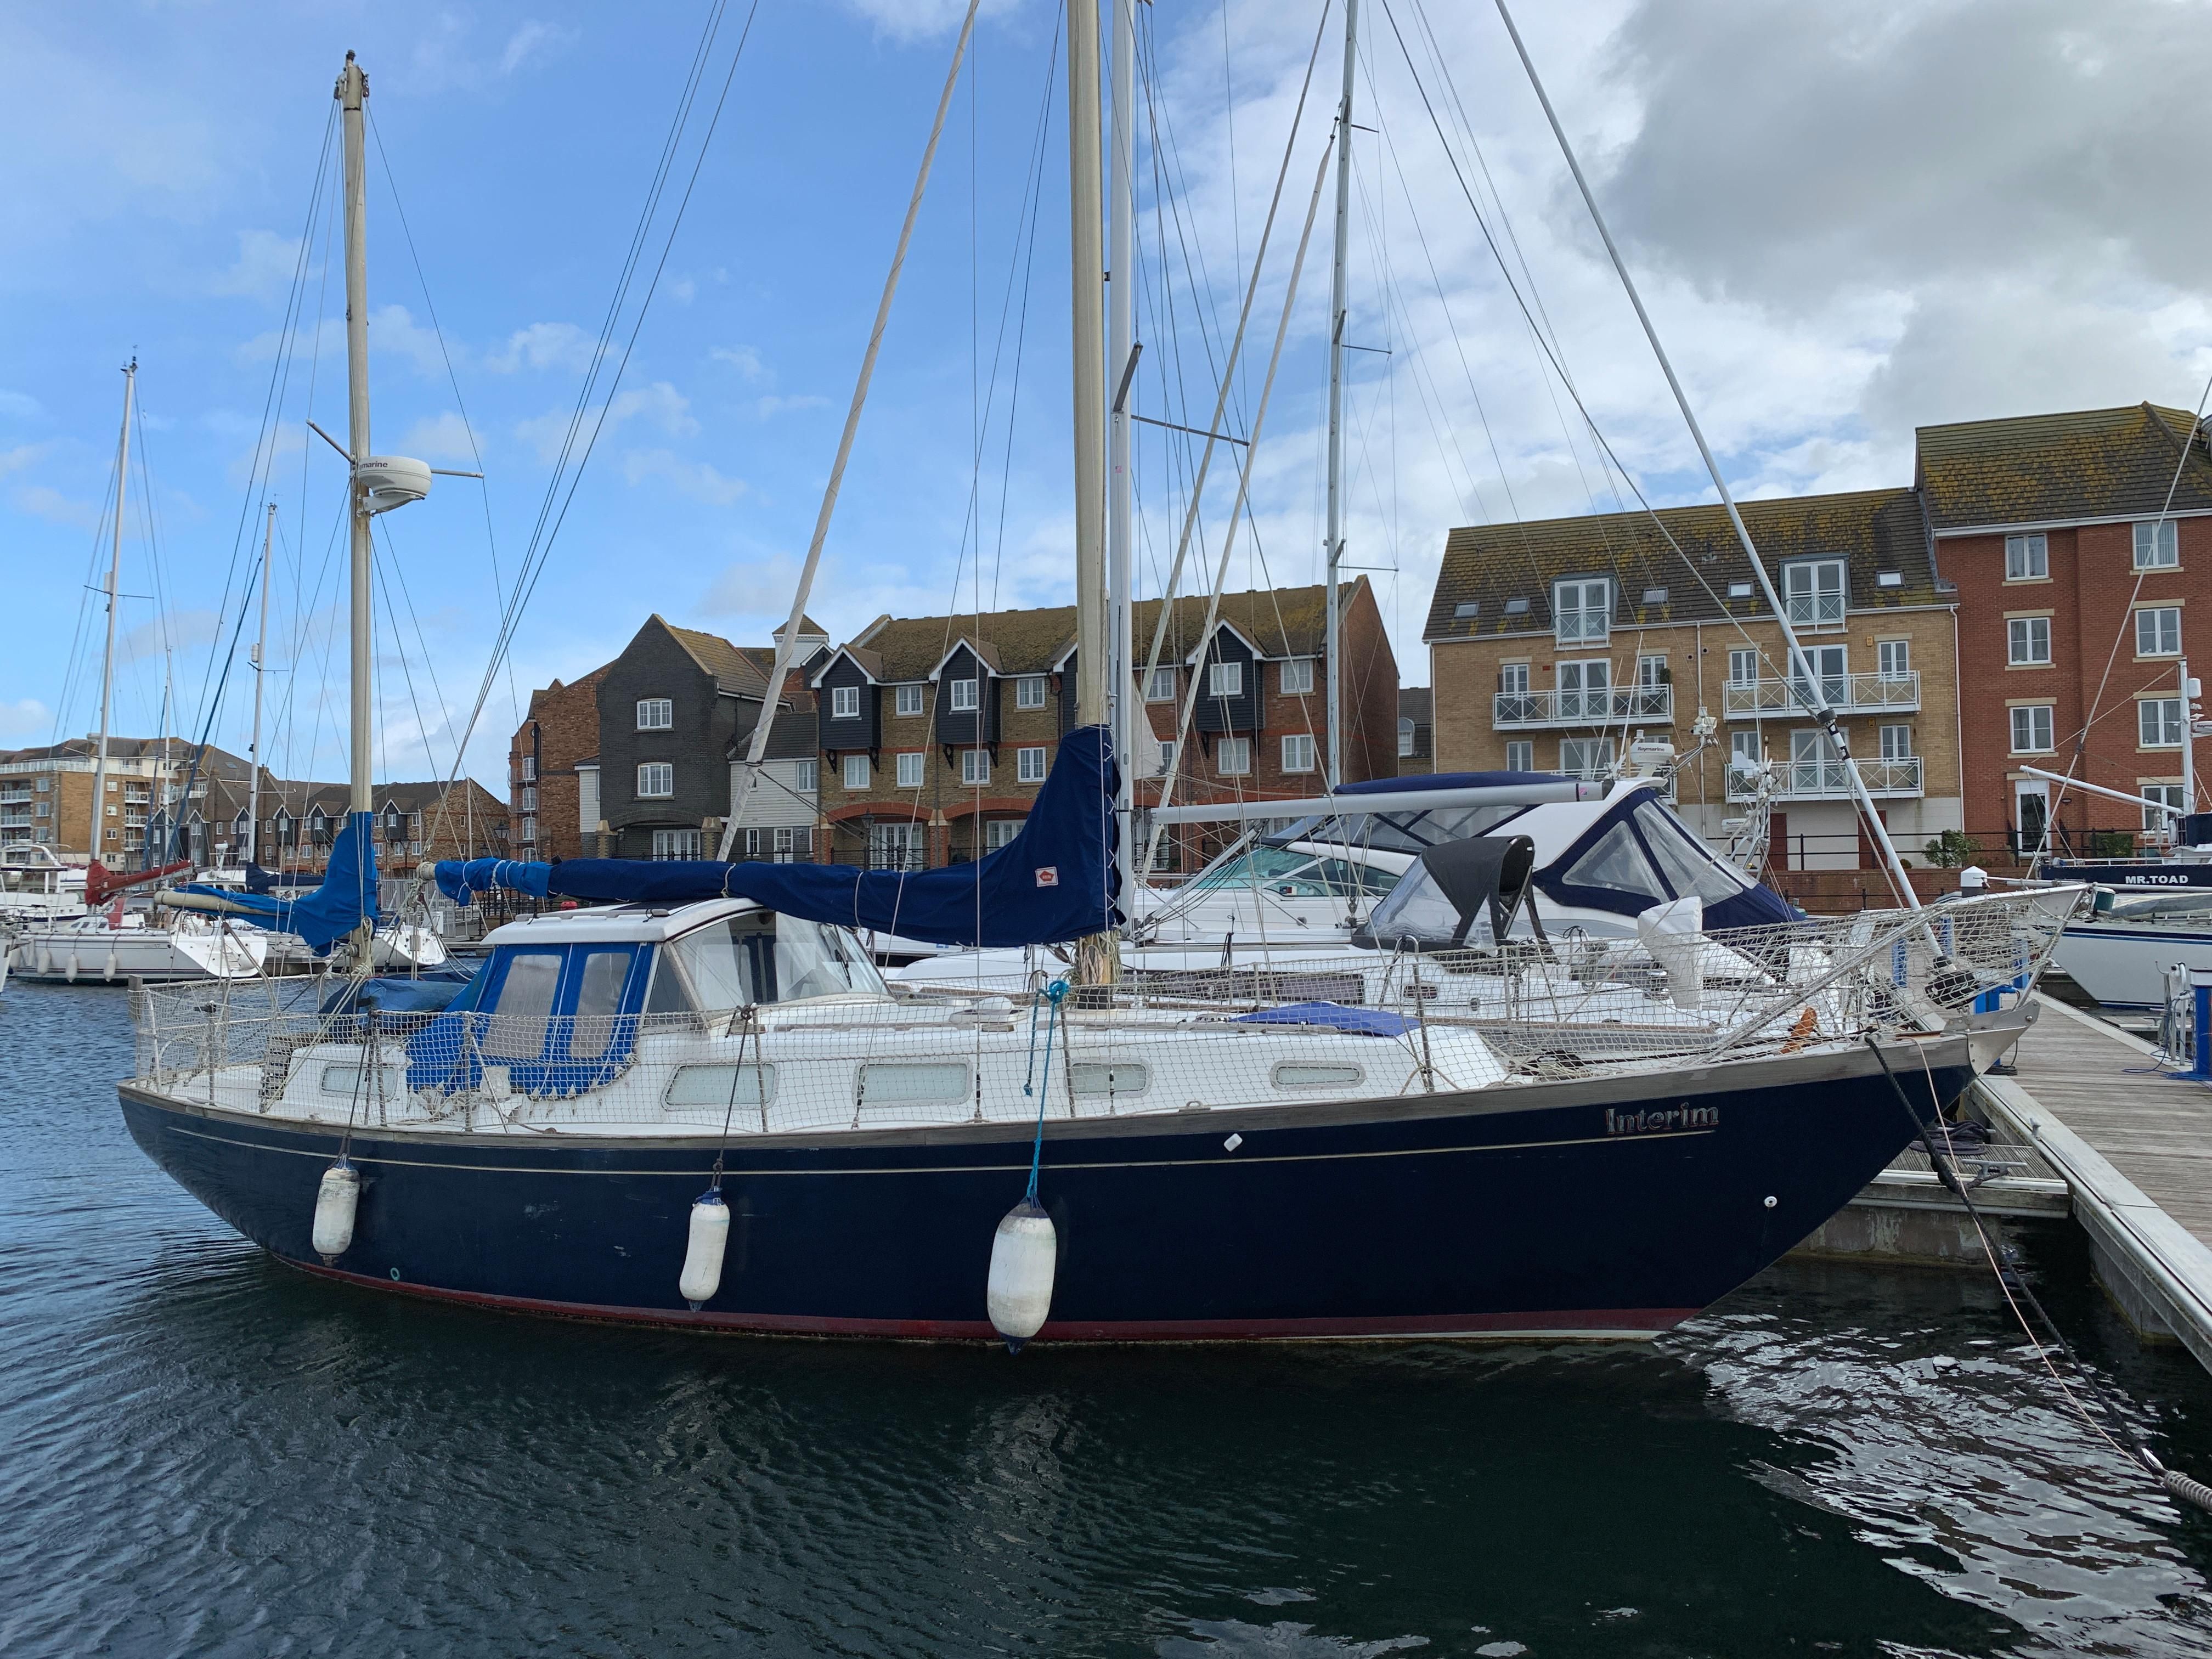 nicholson yacht for sale uk